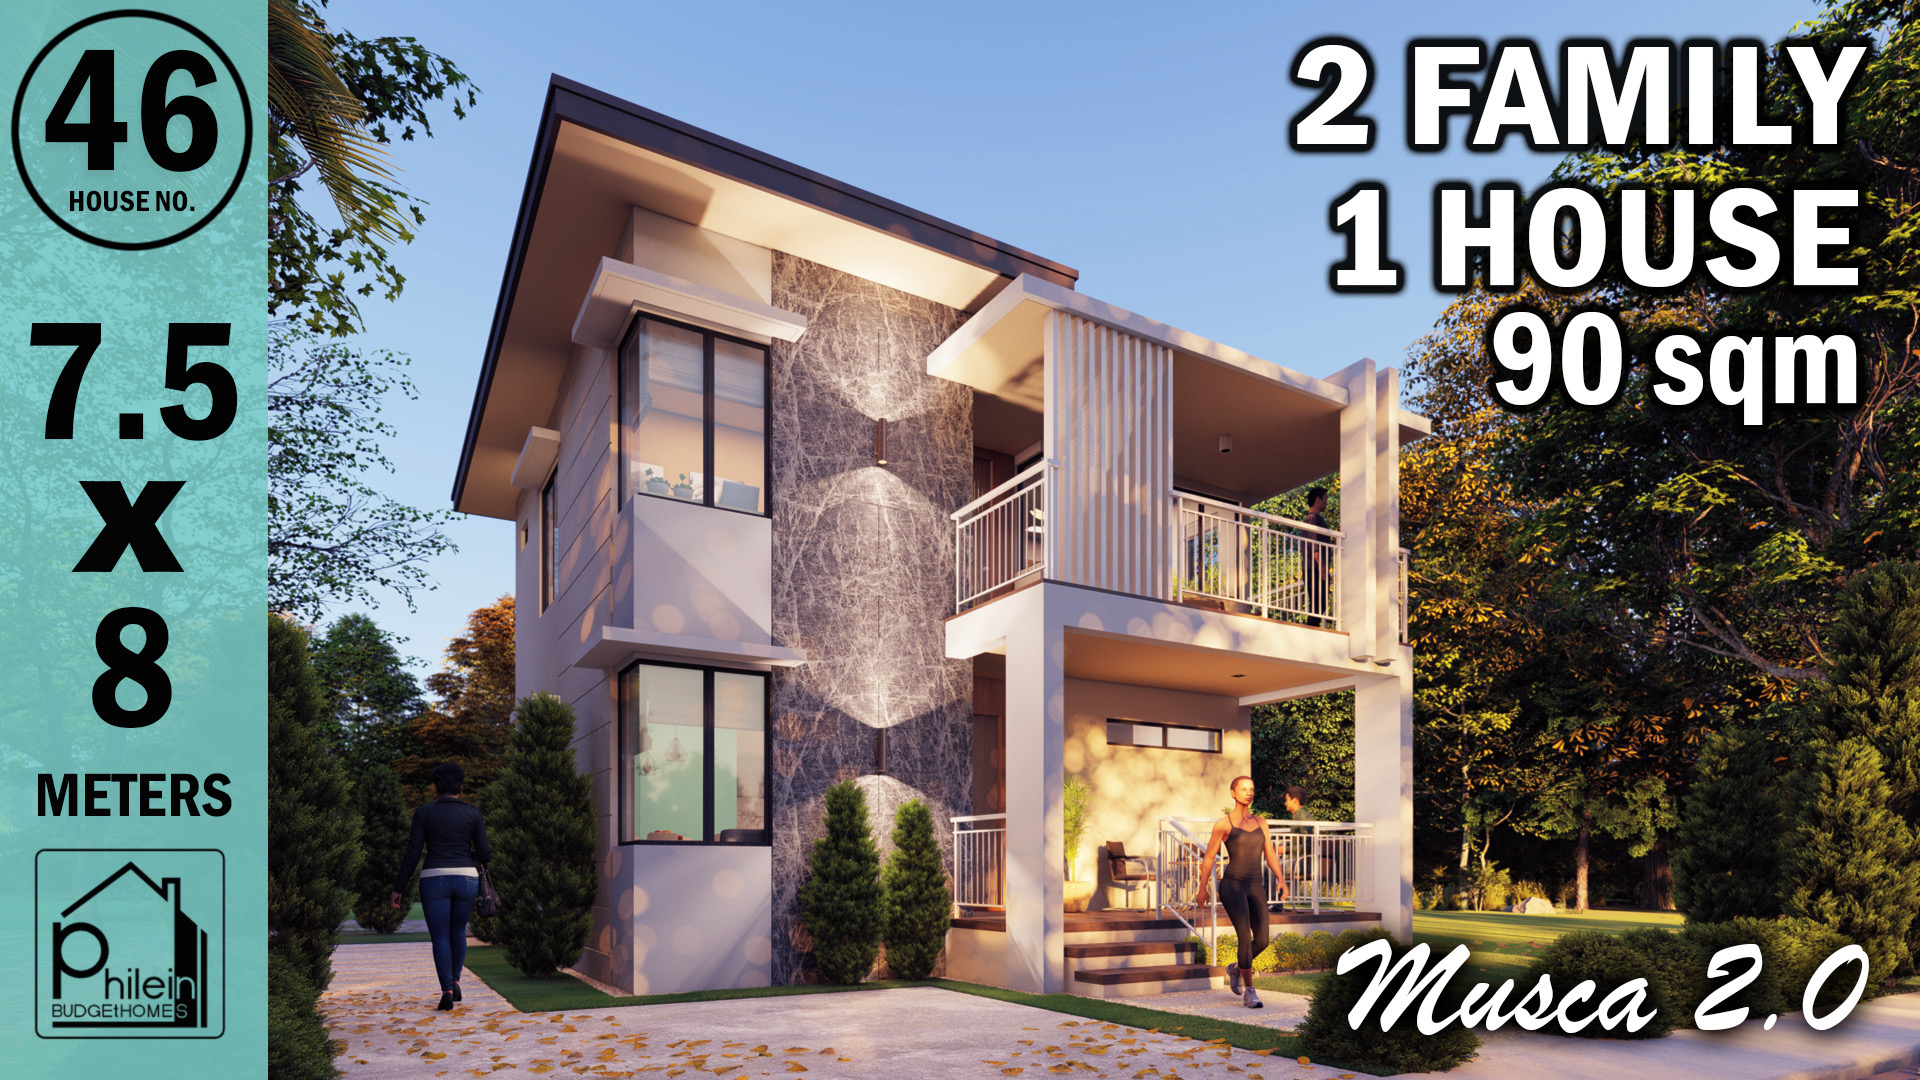 MUSCA 2.0 (2 Storey Multi Family House Design)